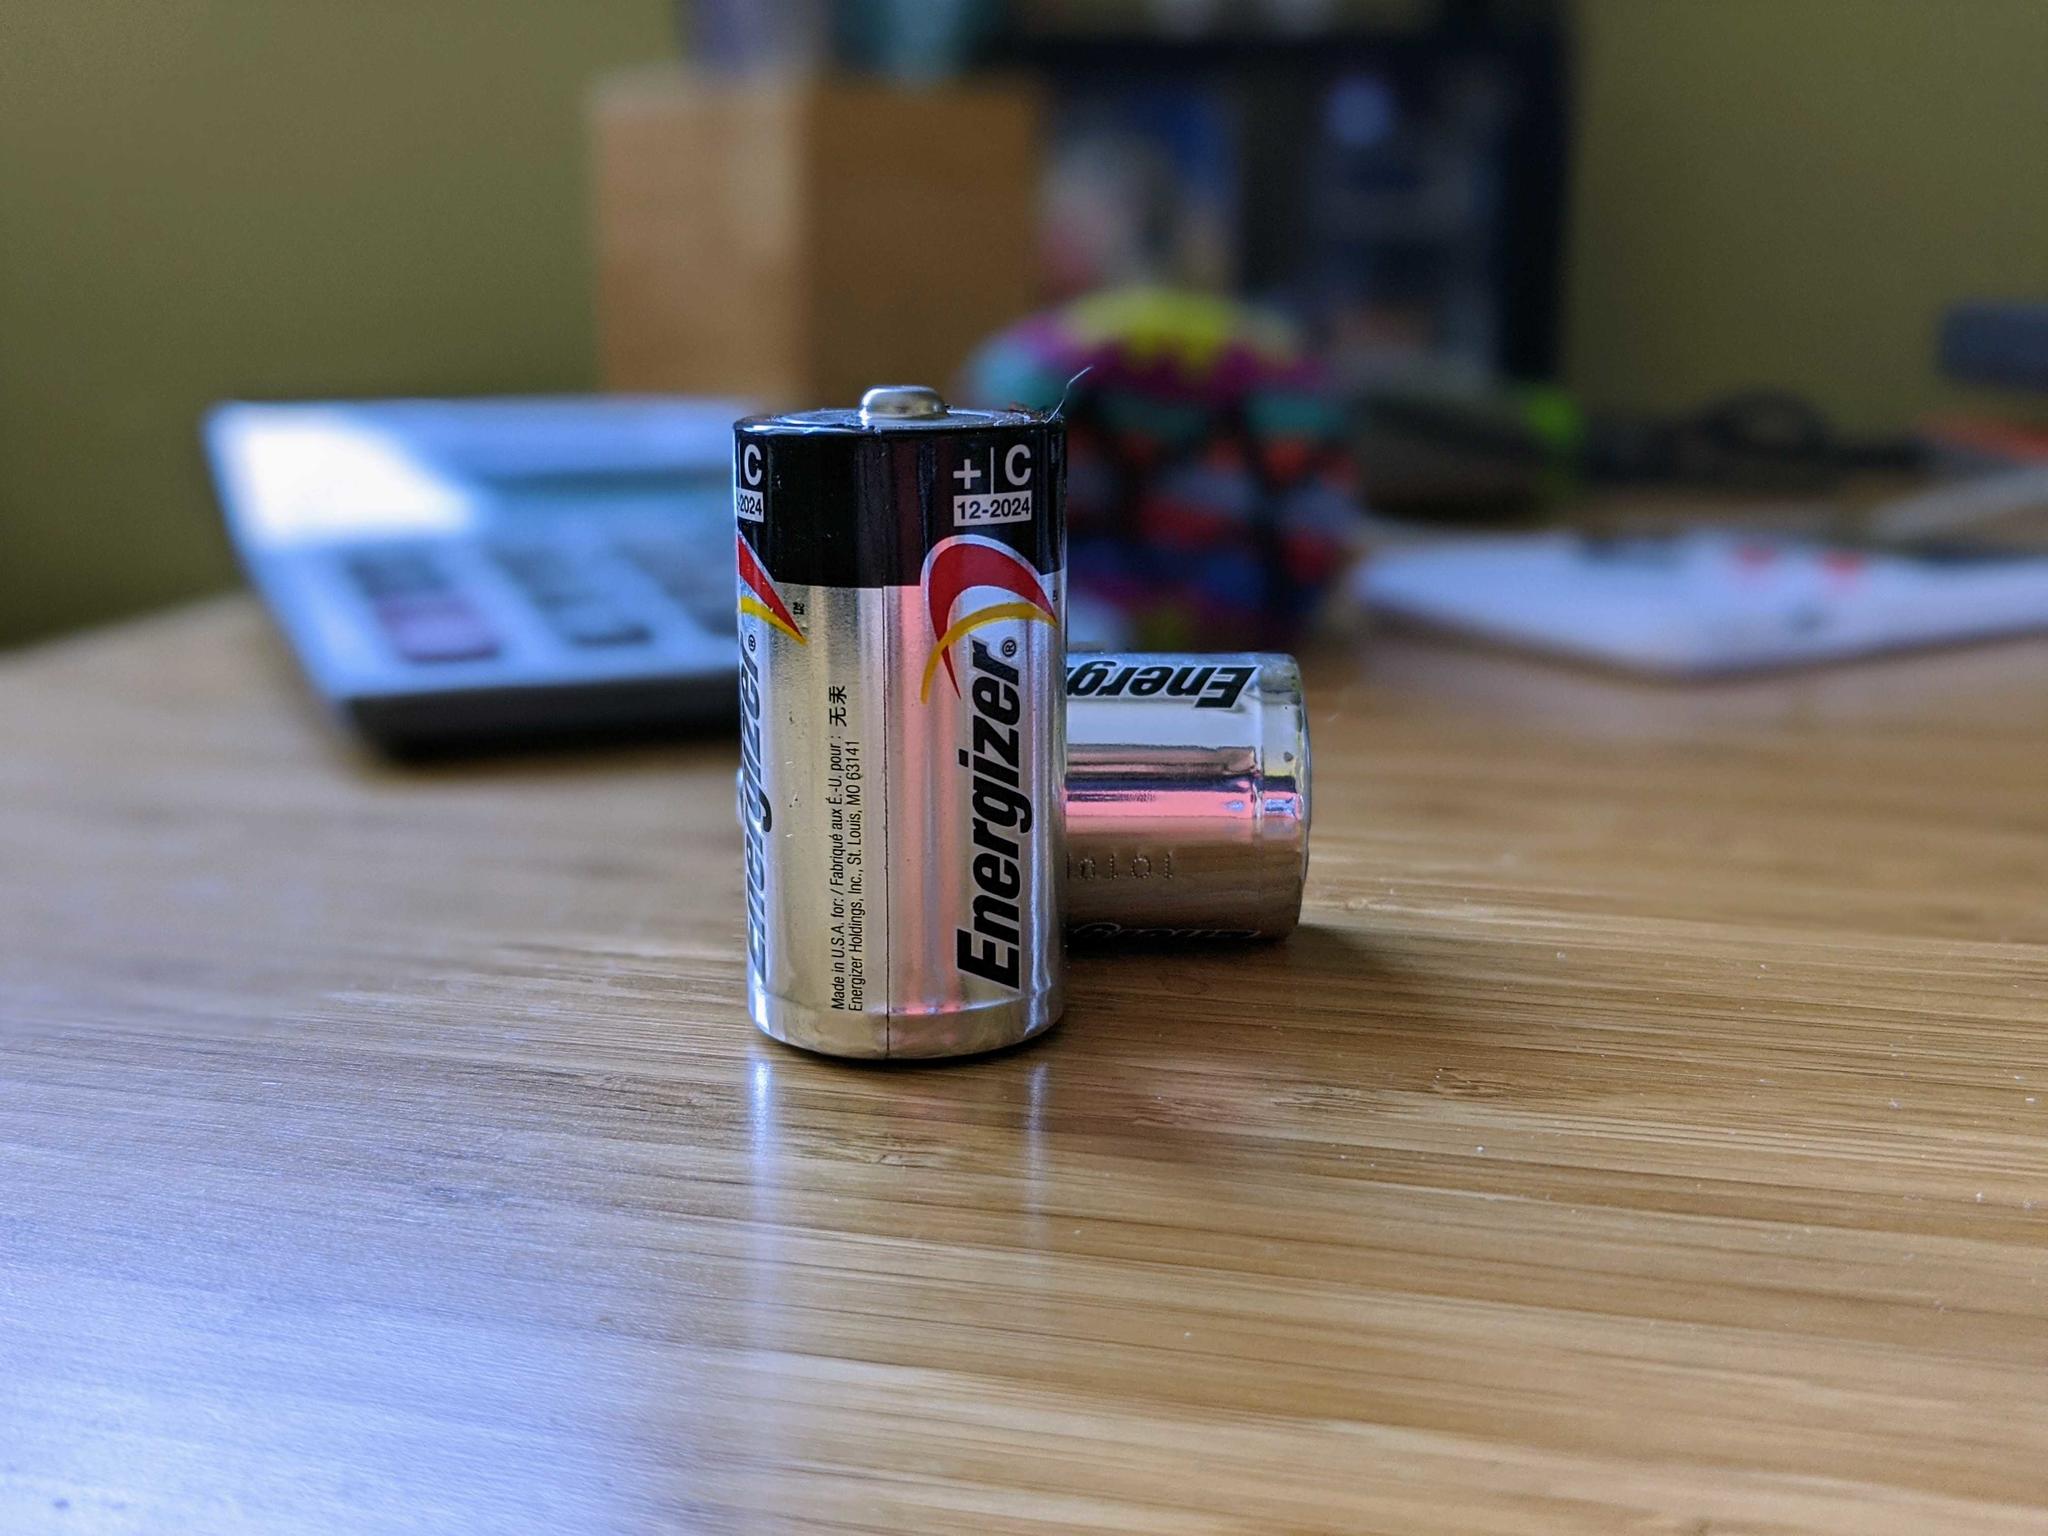 C batteries. A-data батарейка.